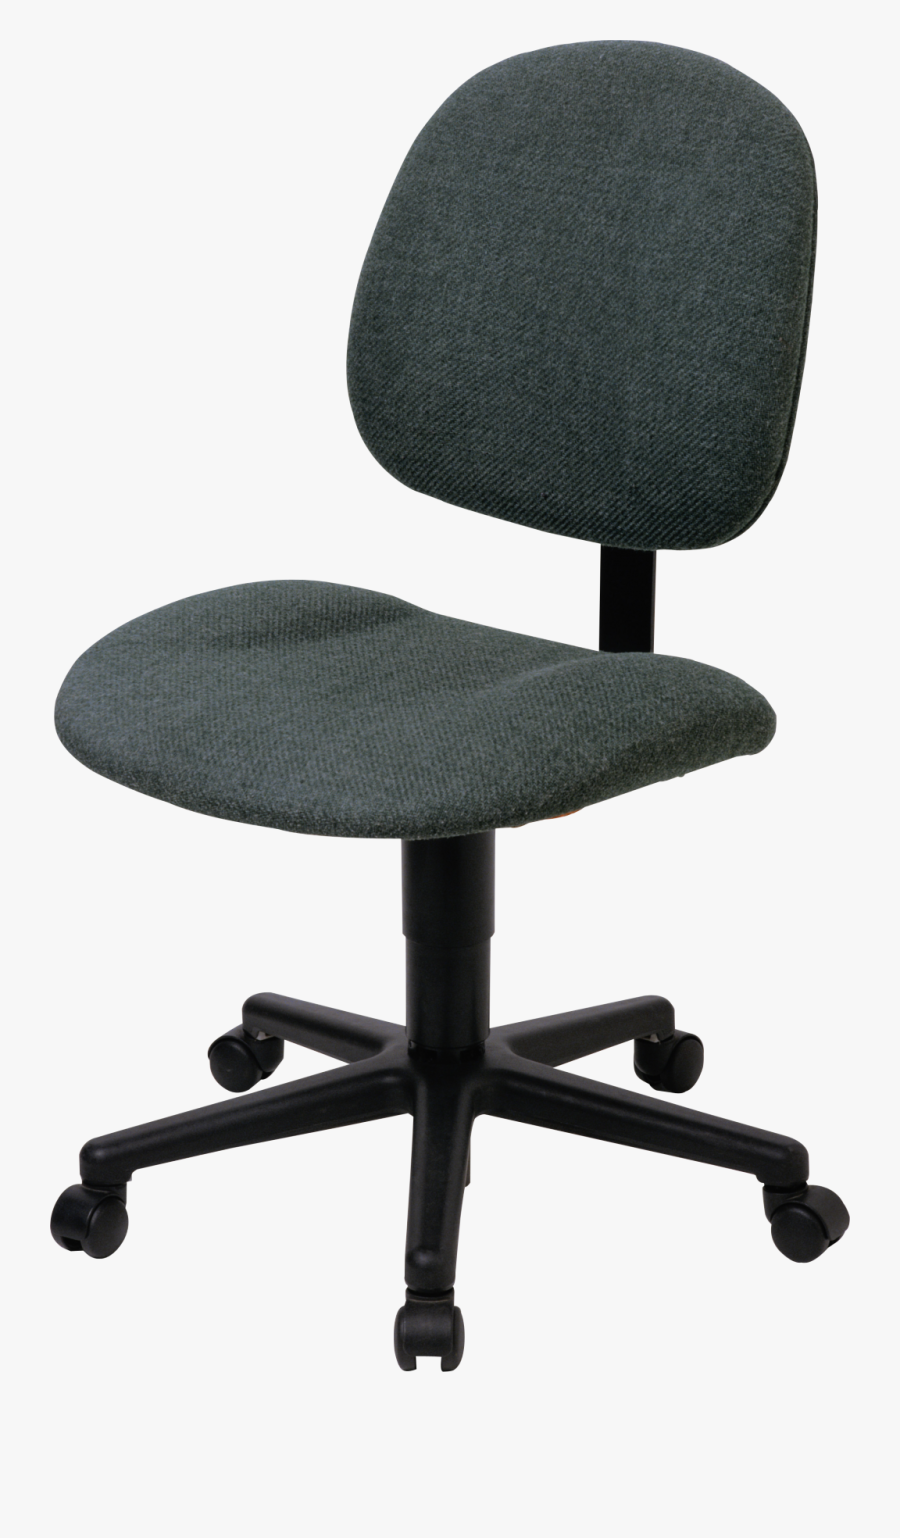 Desk Chair Best Of Chair Clipart Desk Chair Pencil - Office Chair Transparent Background, Transparent Clipart